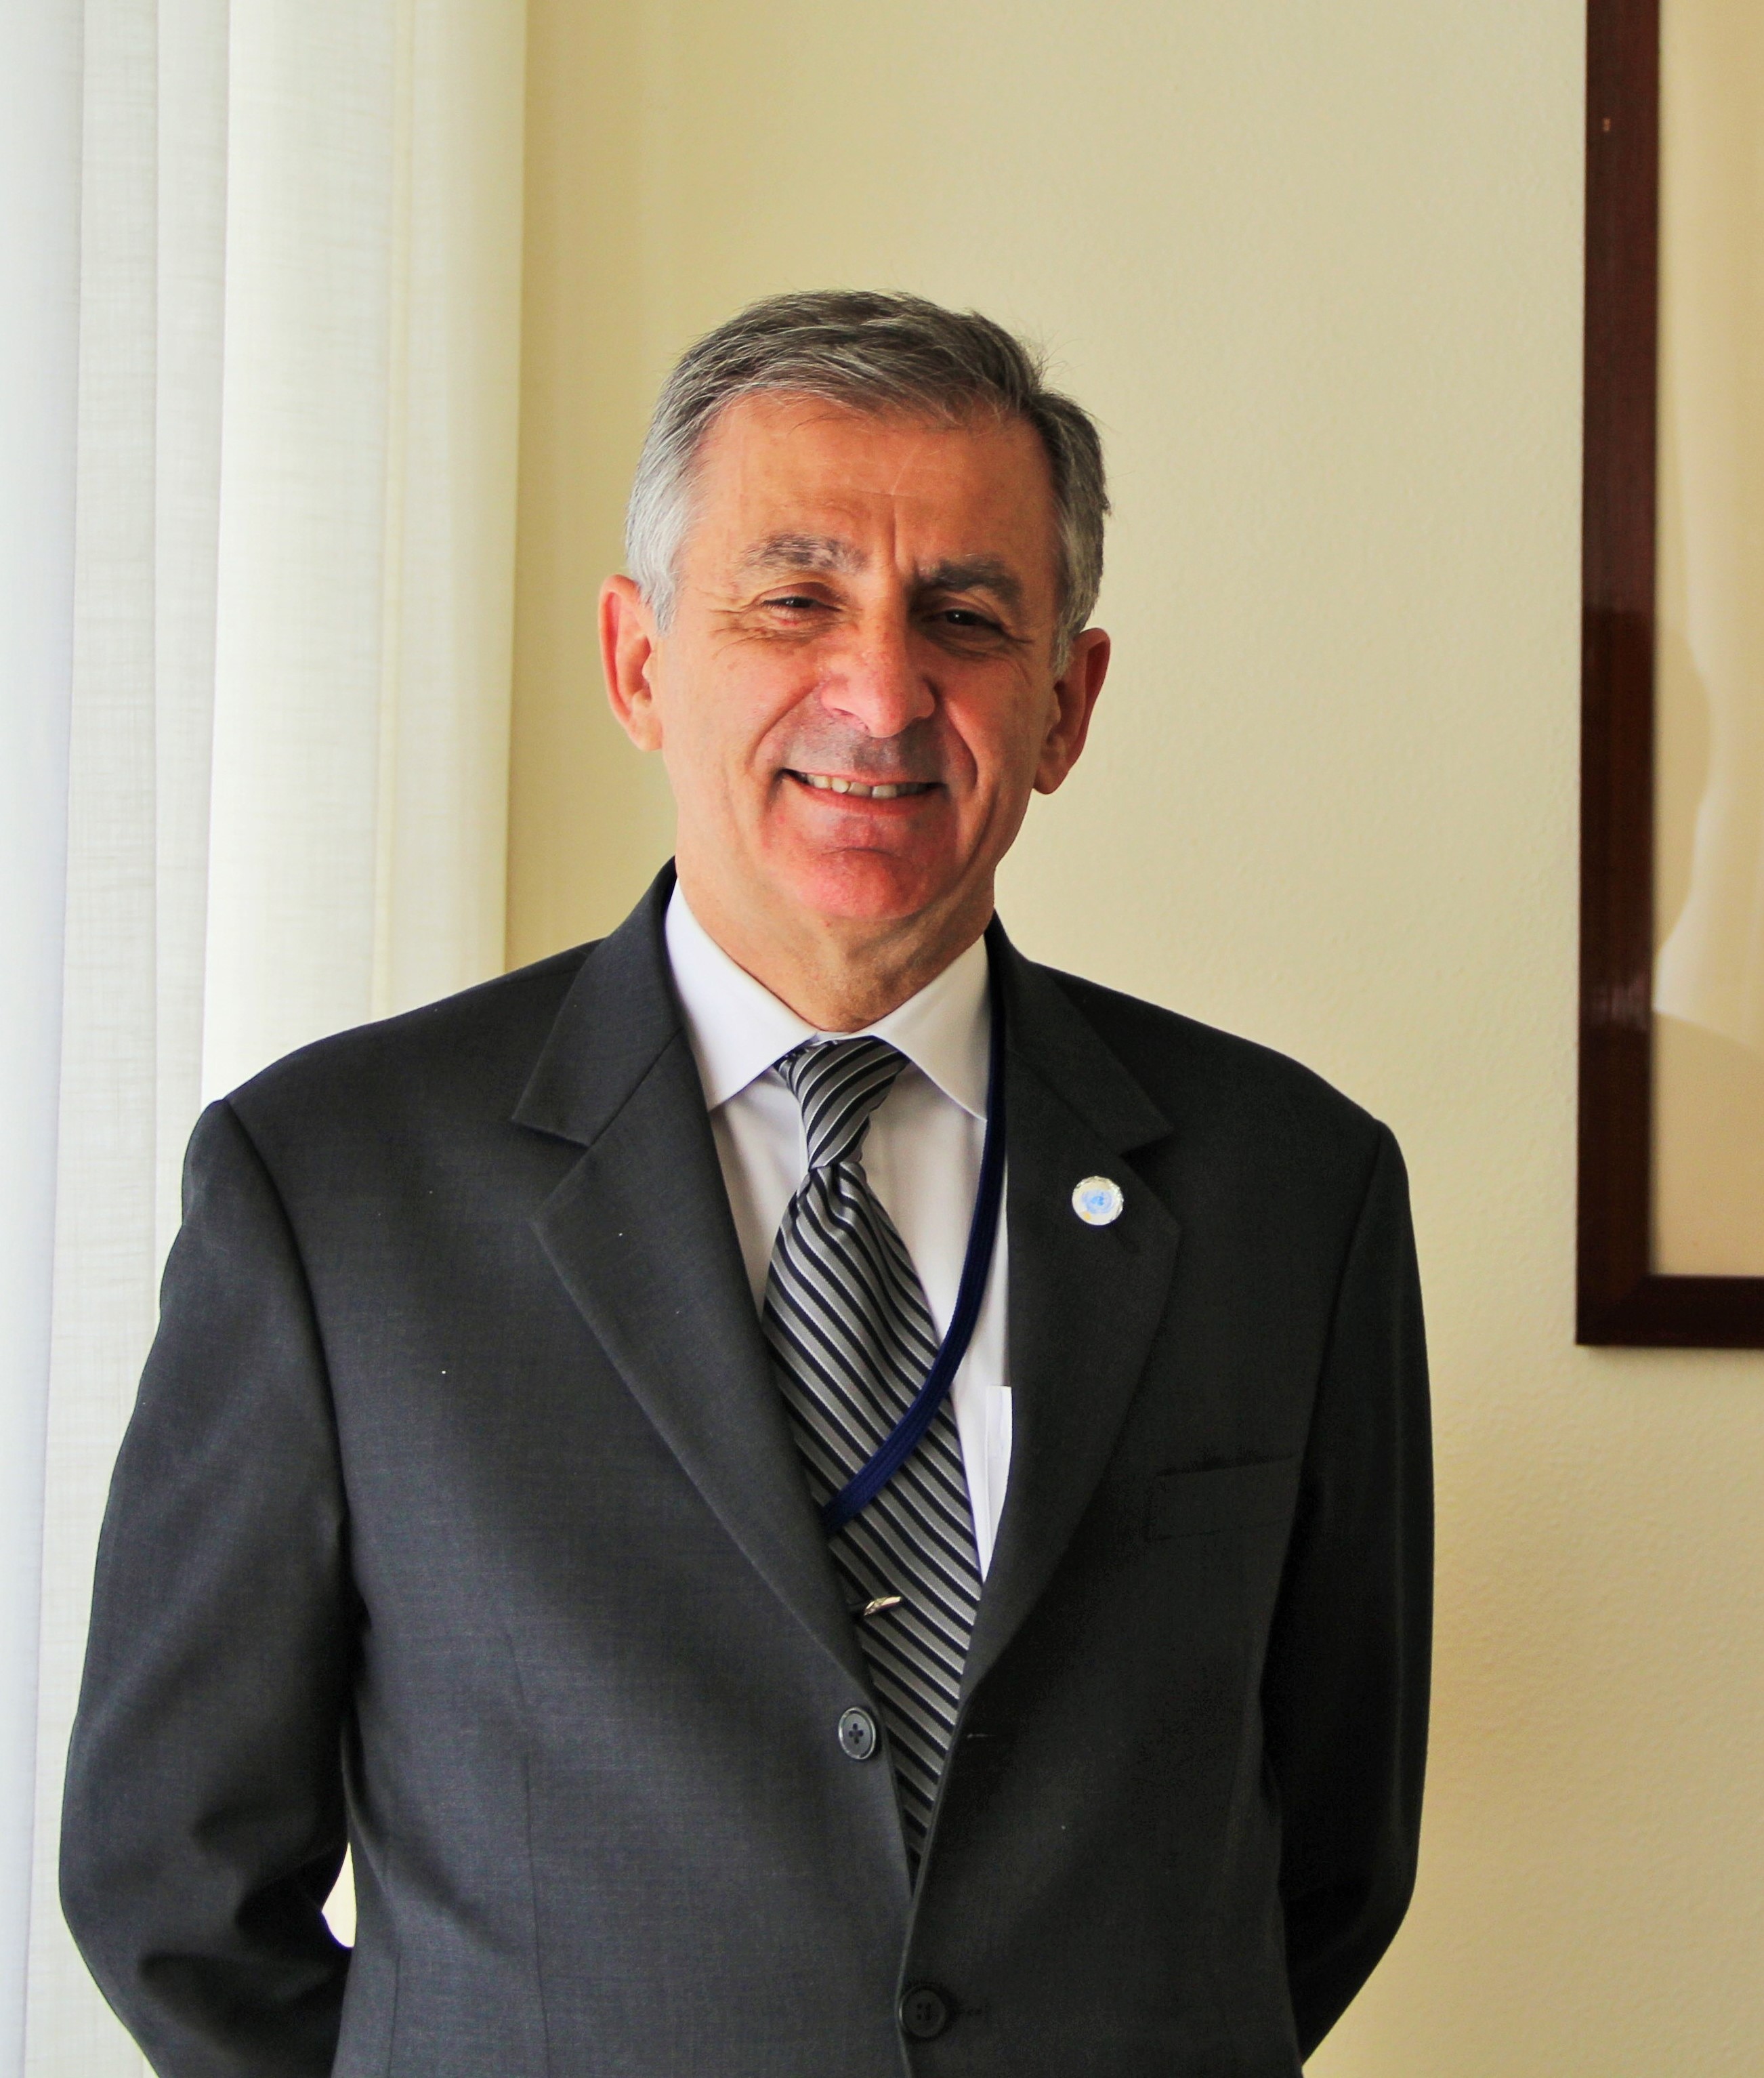 UN CTED Executive Director Jean-Paul Laborde